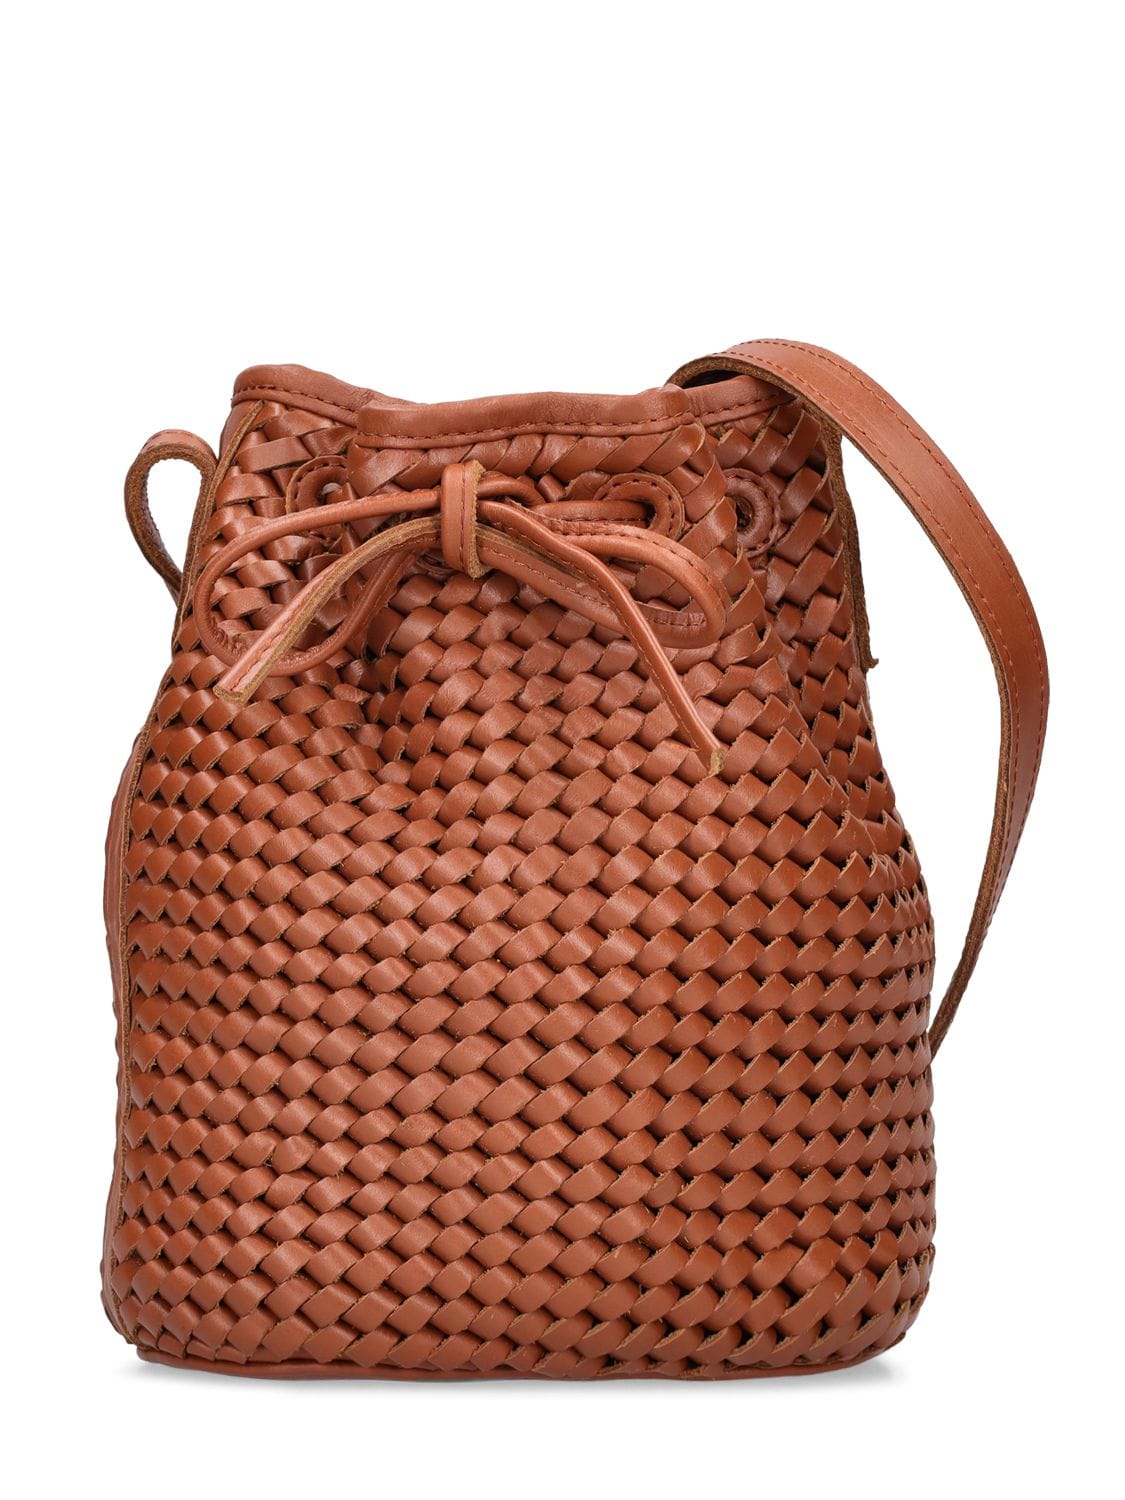 BEMBIEN Isabelle Handwoven Leather Bucket Bag